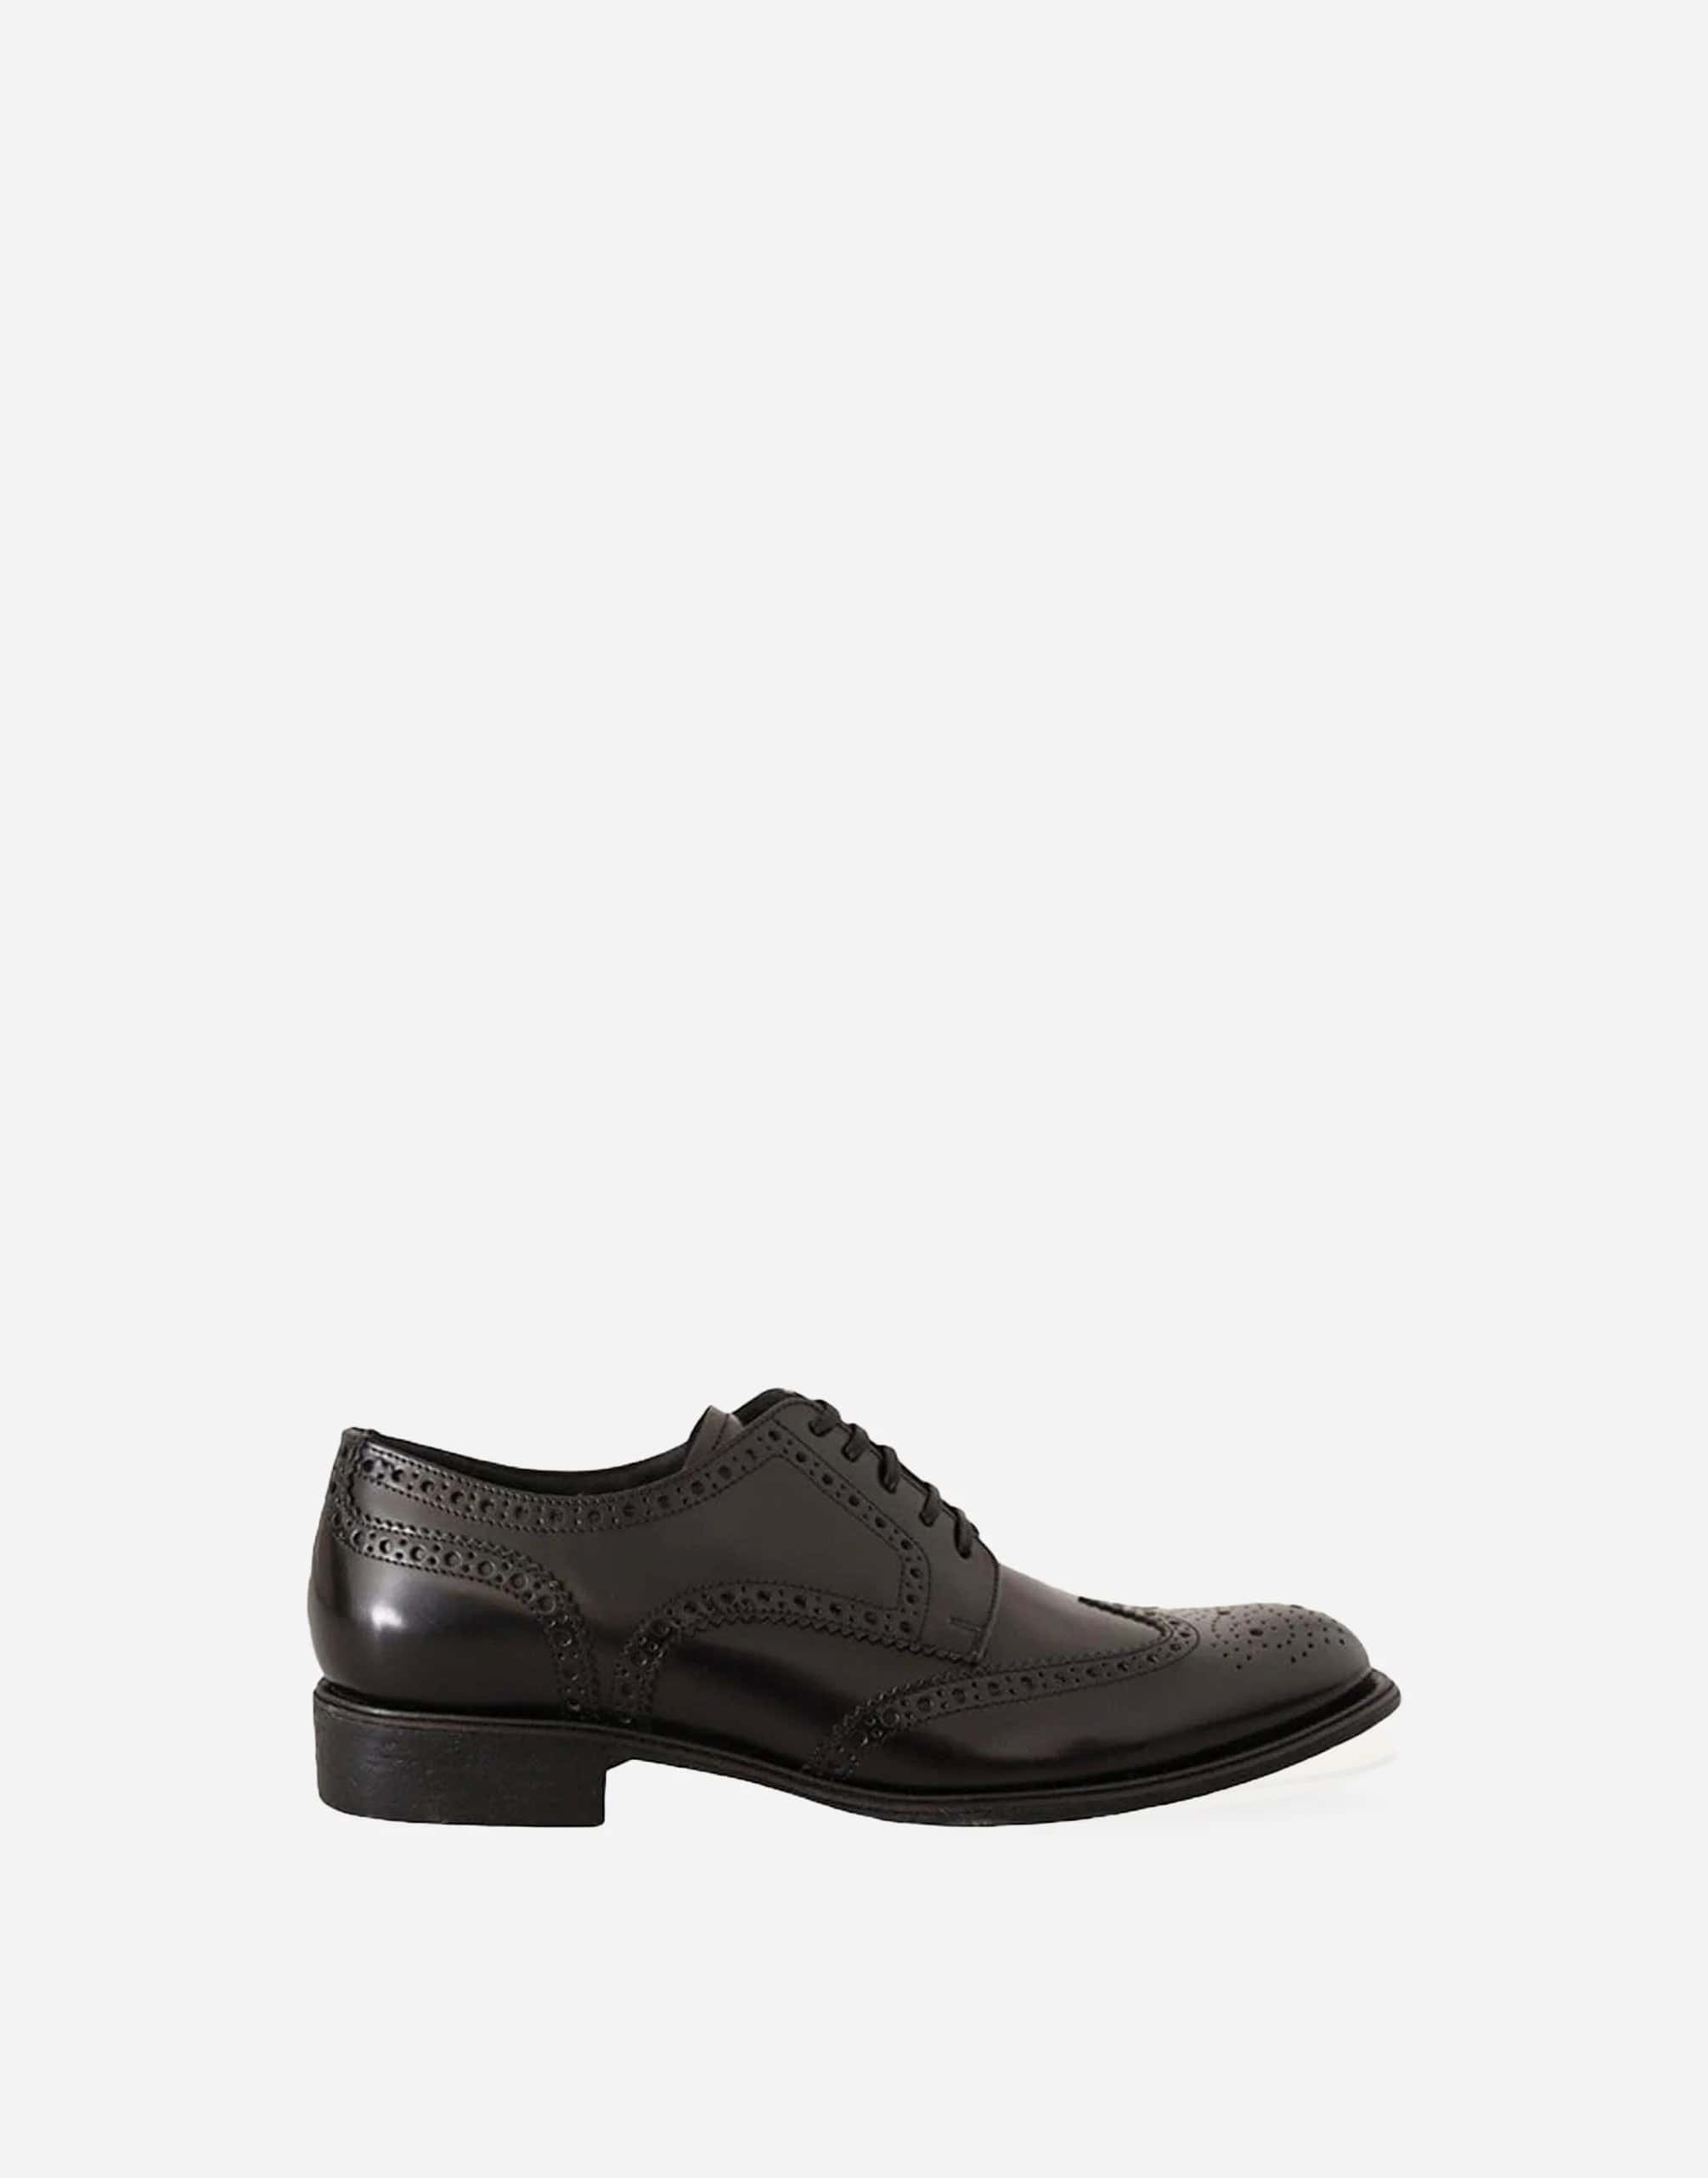 Dolce & Gabbana Wingtip Oxford Derby Shoes